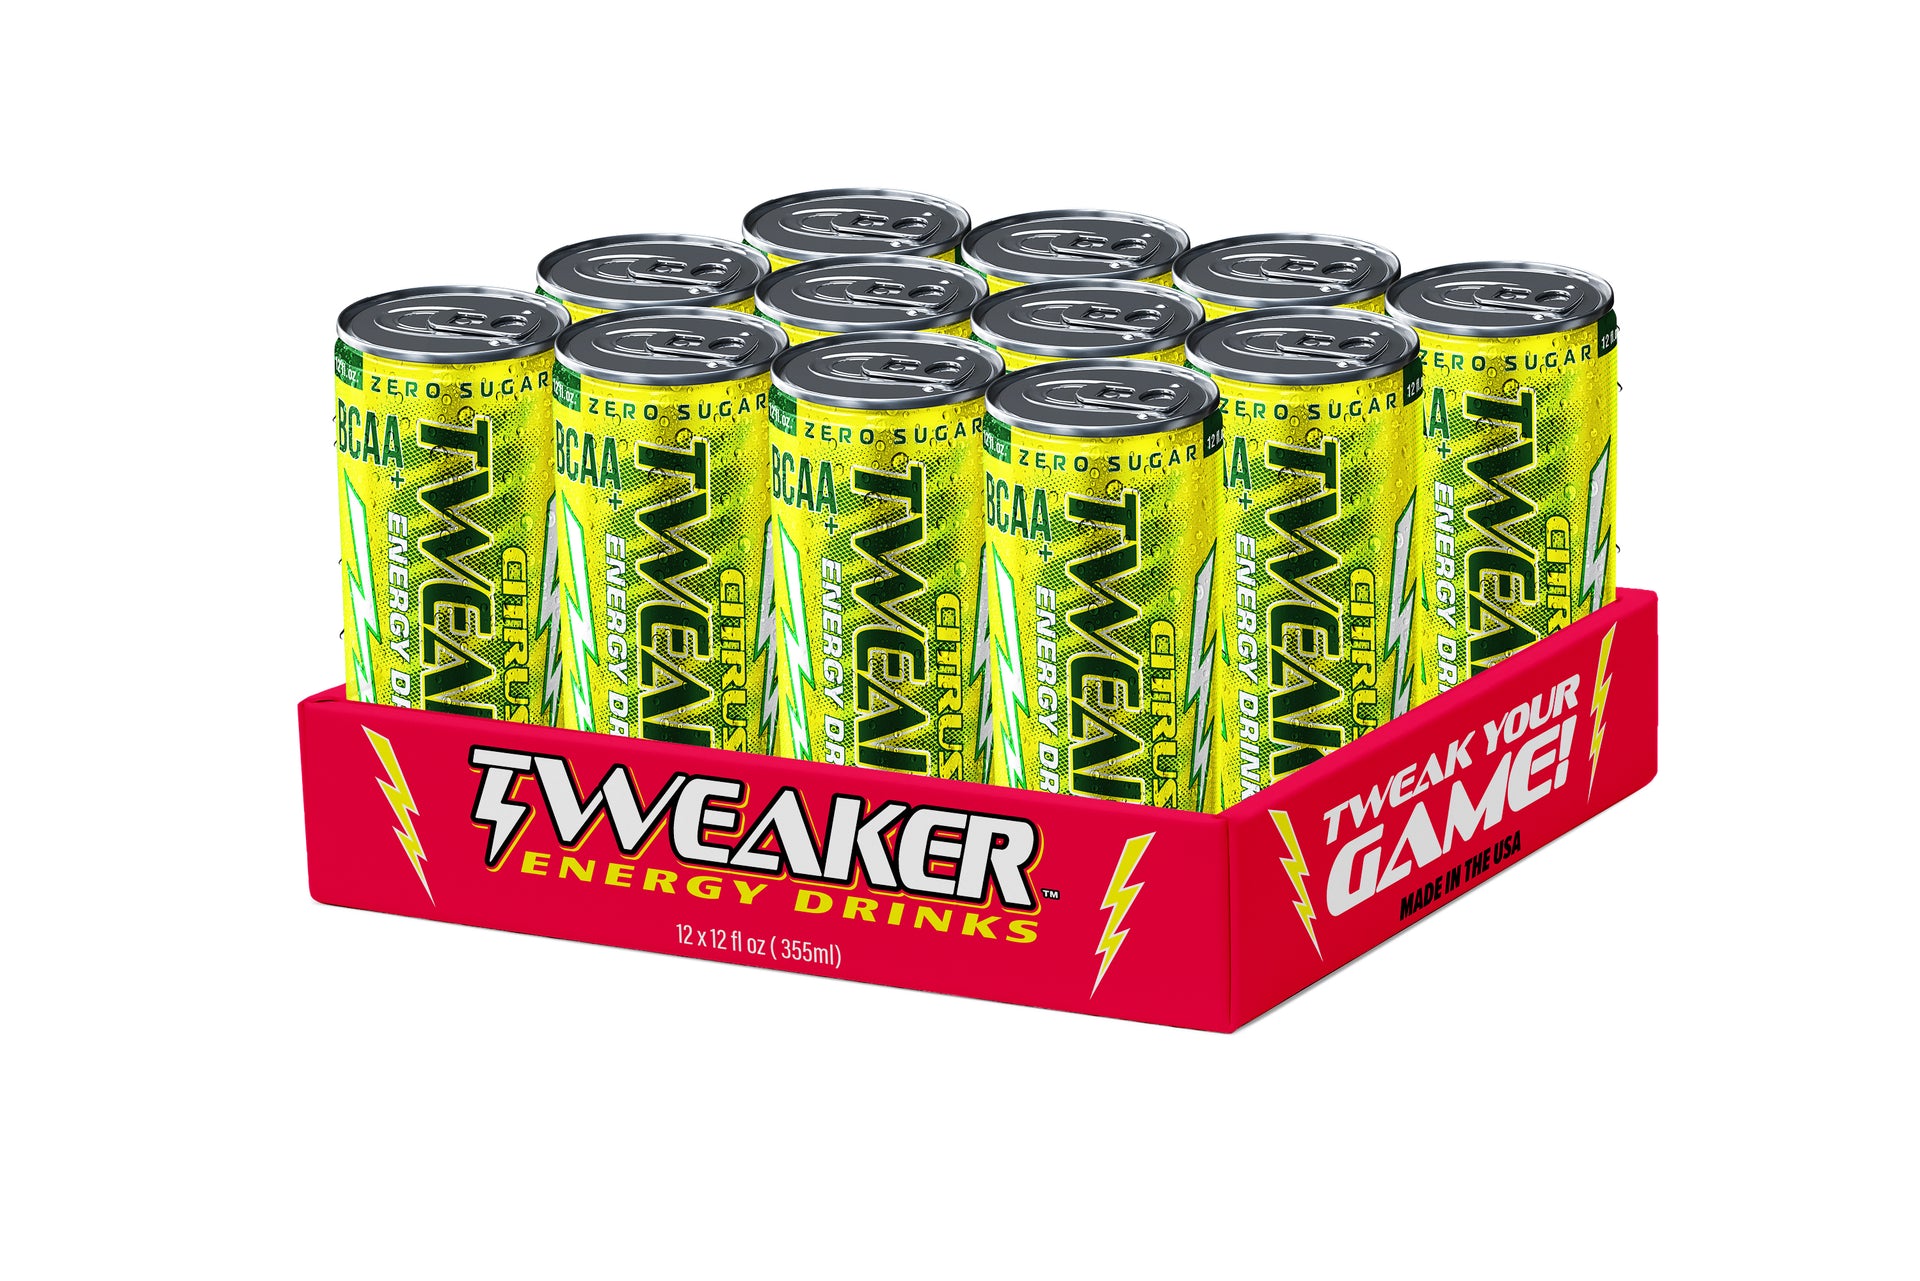 Image shows 12 pack case of Tweaker Energy Drink, Citrus flavor